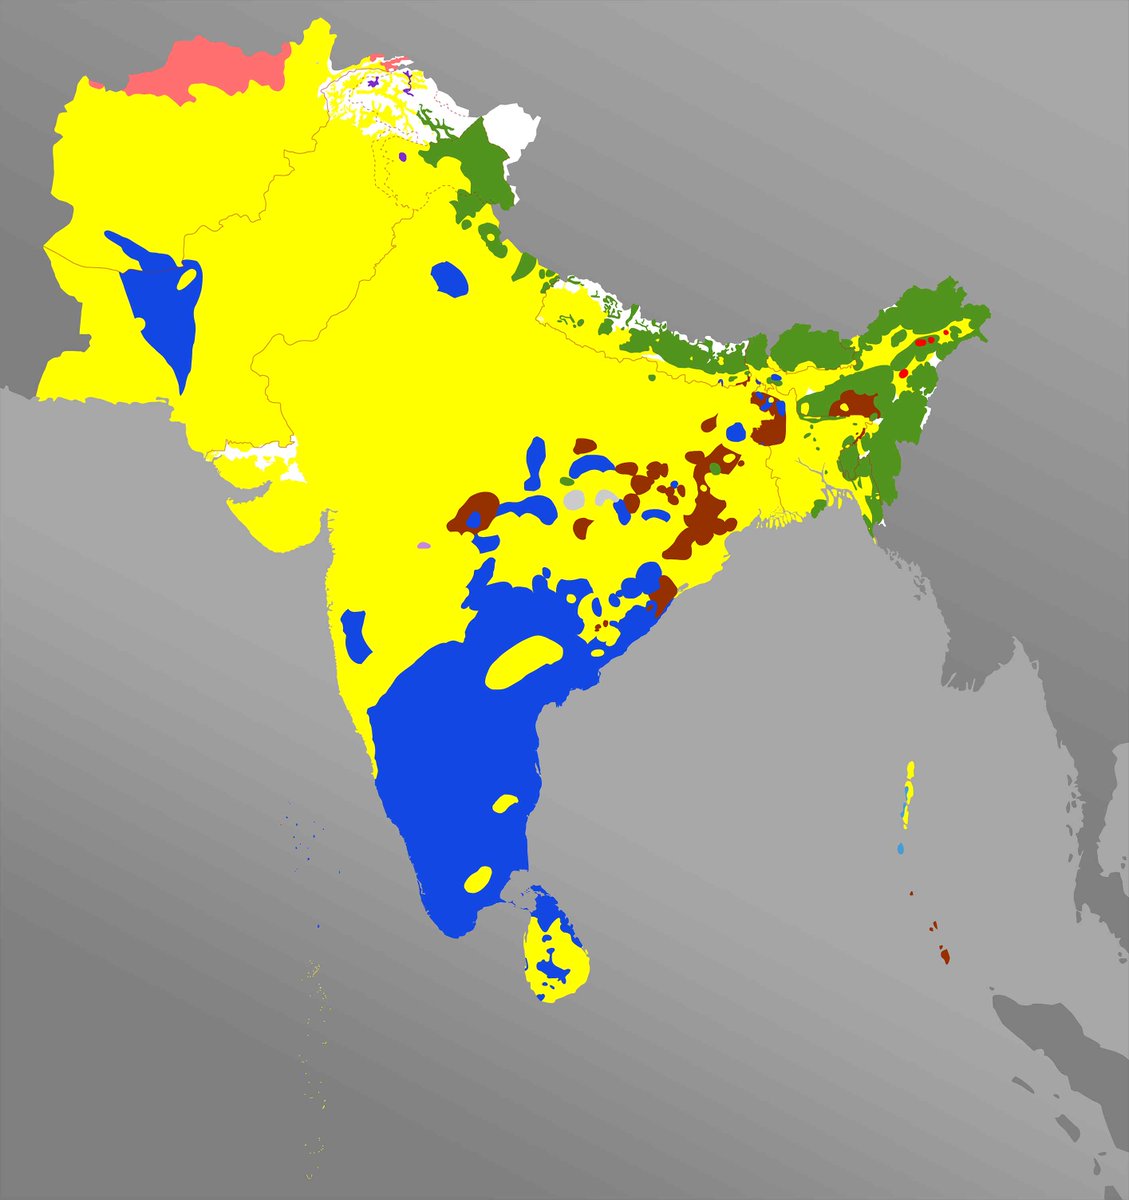 ট ইট র 国立民族学博物館 7月26日14時半 言語から歴史を読み解く 南アジアを例にして 南アジア言語分布図や実際の発話の例等を基に言語 の現状から歴史を読み解く 南アジアを言語グループで色分けした分布図 どういう経緯でこの様になったのか 2015年3月作成